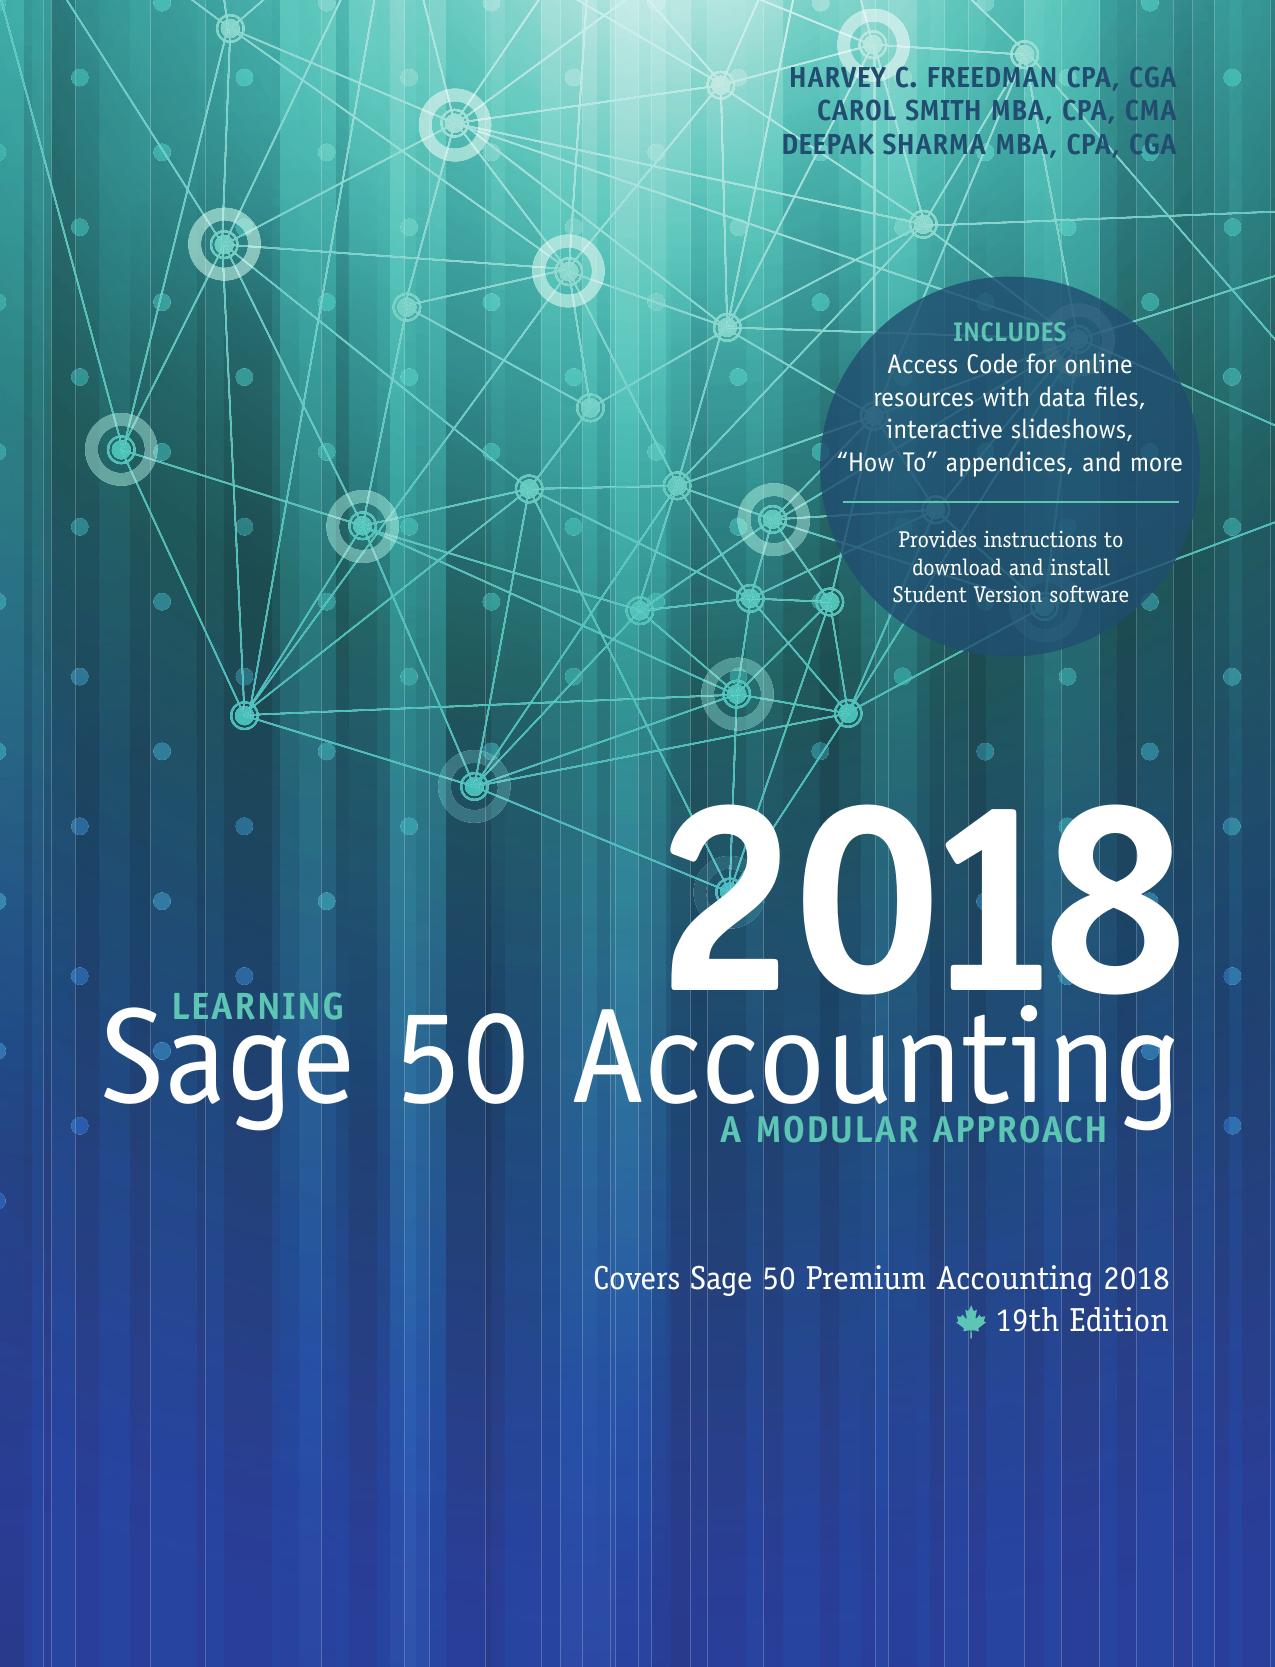 Learning Sage 50 Accounting 2018 A Modular Approach 19th Edition By Freedman - Wei Zhi.jpg